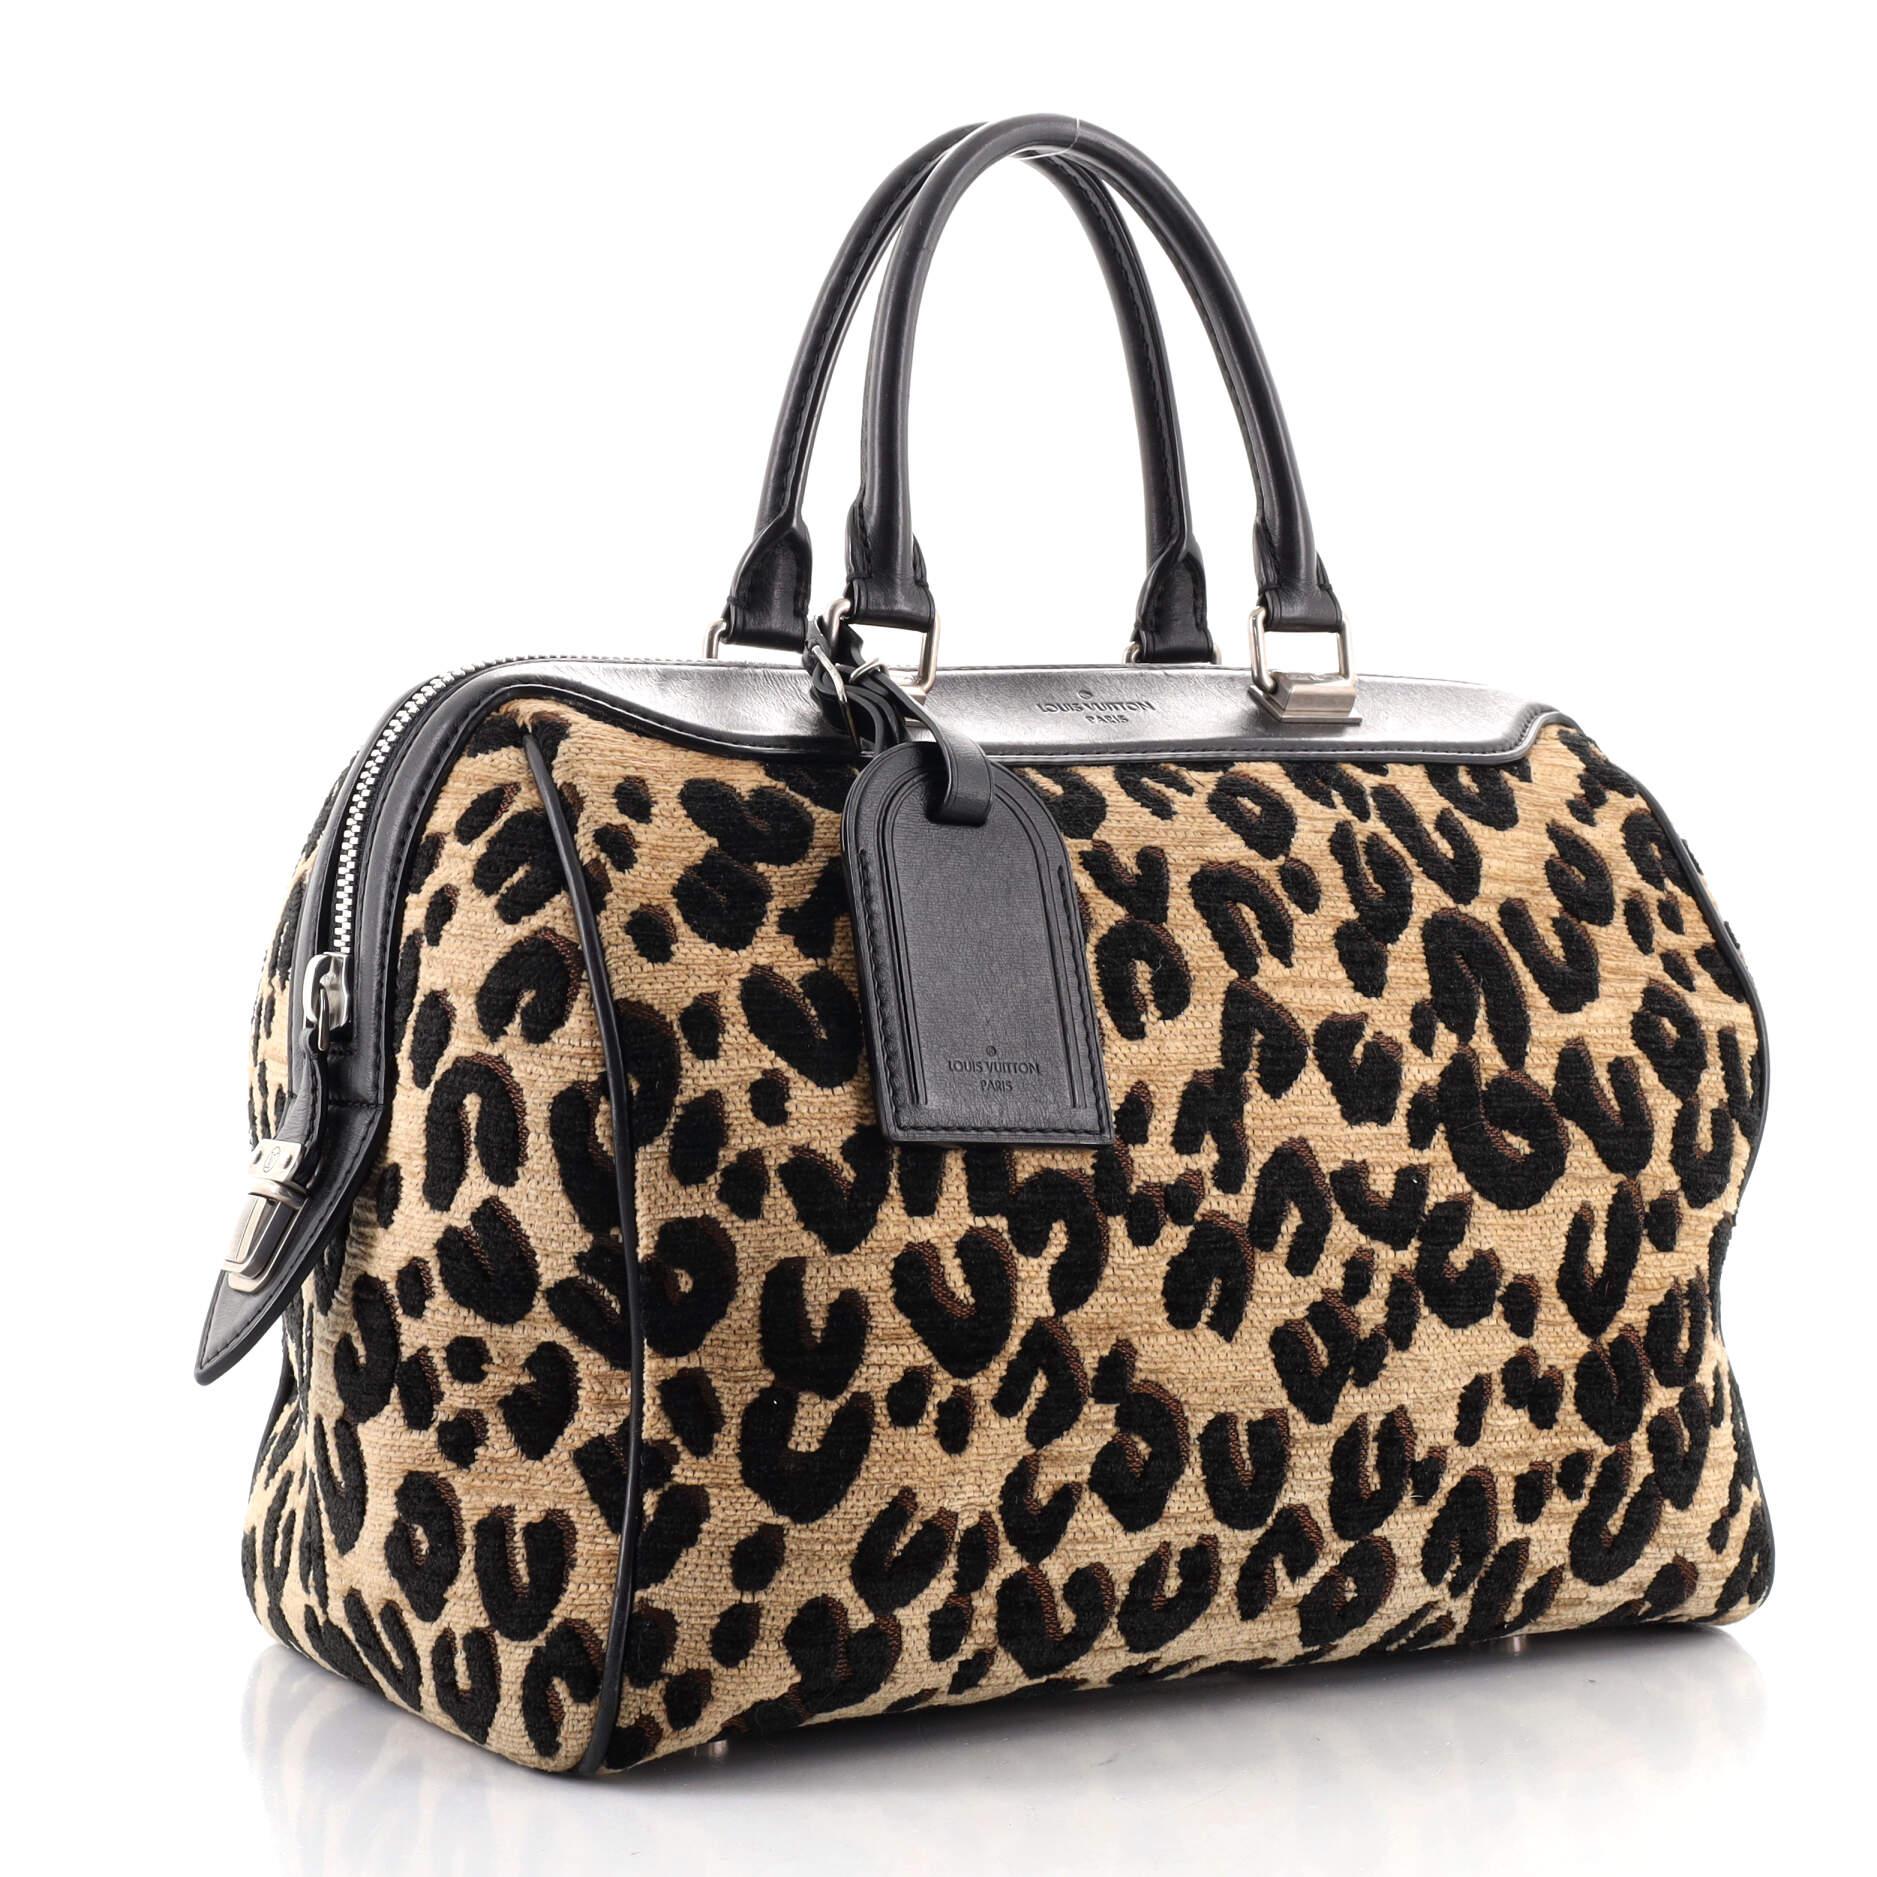 Black Louis Vuitton Speedy Handbag Limited Edition Stephen Sprouse Leopard Chenille